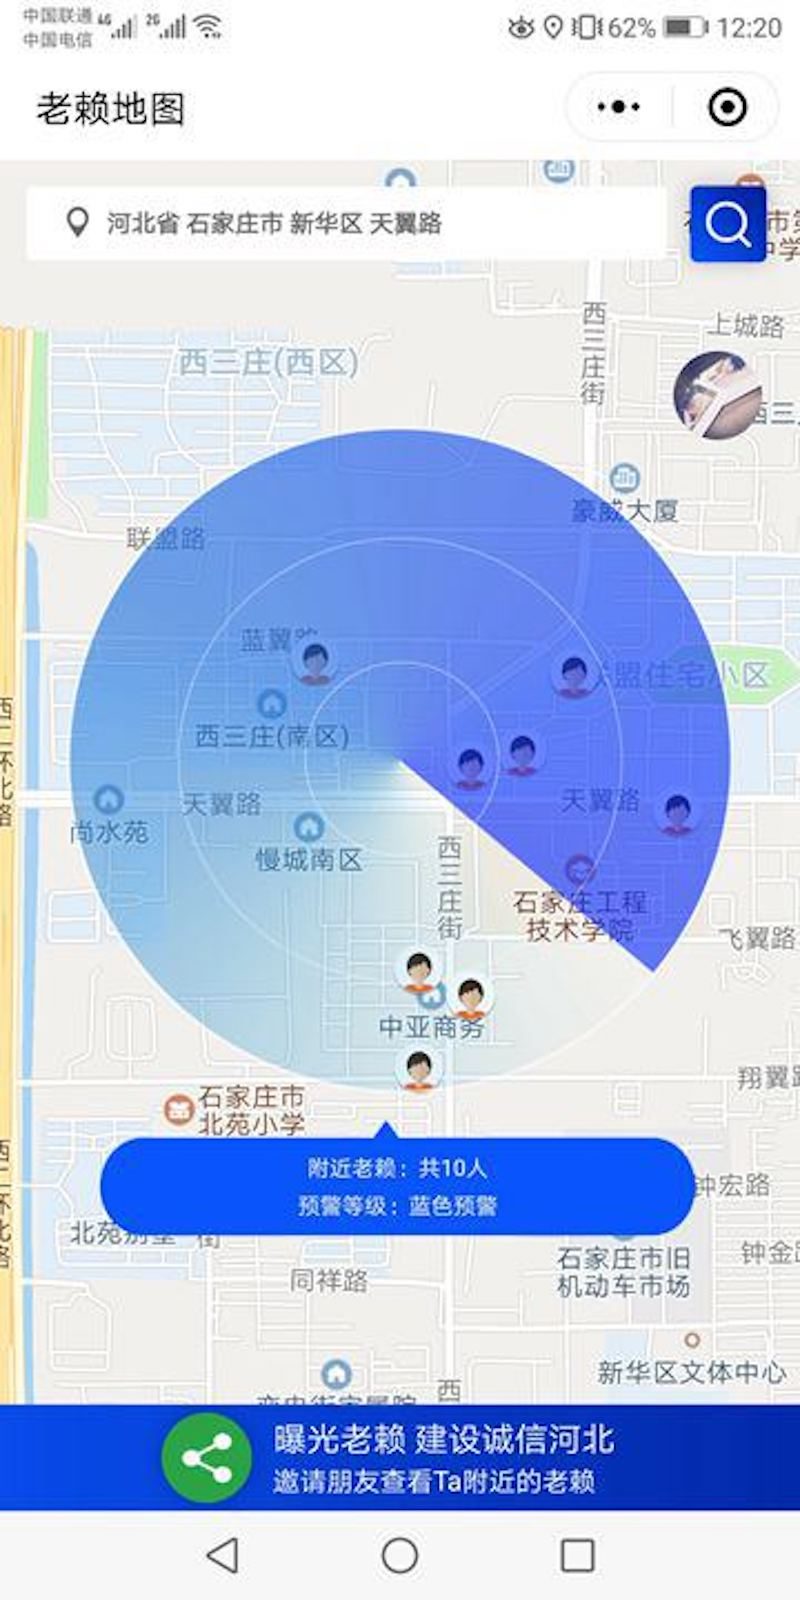 china debtor map app